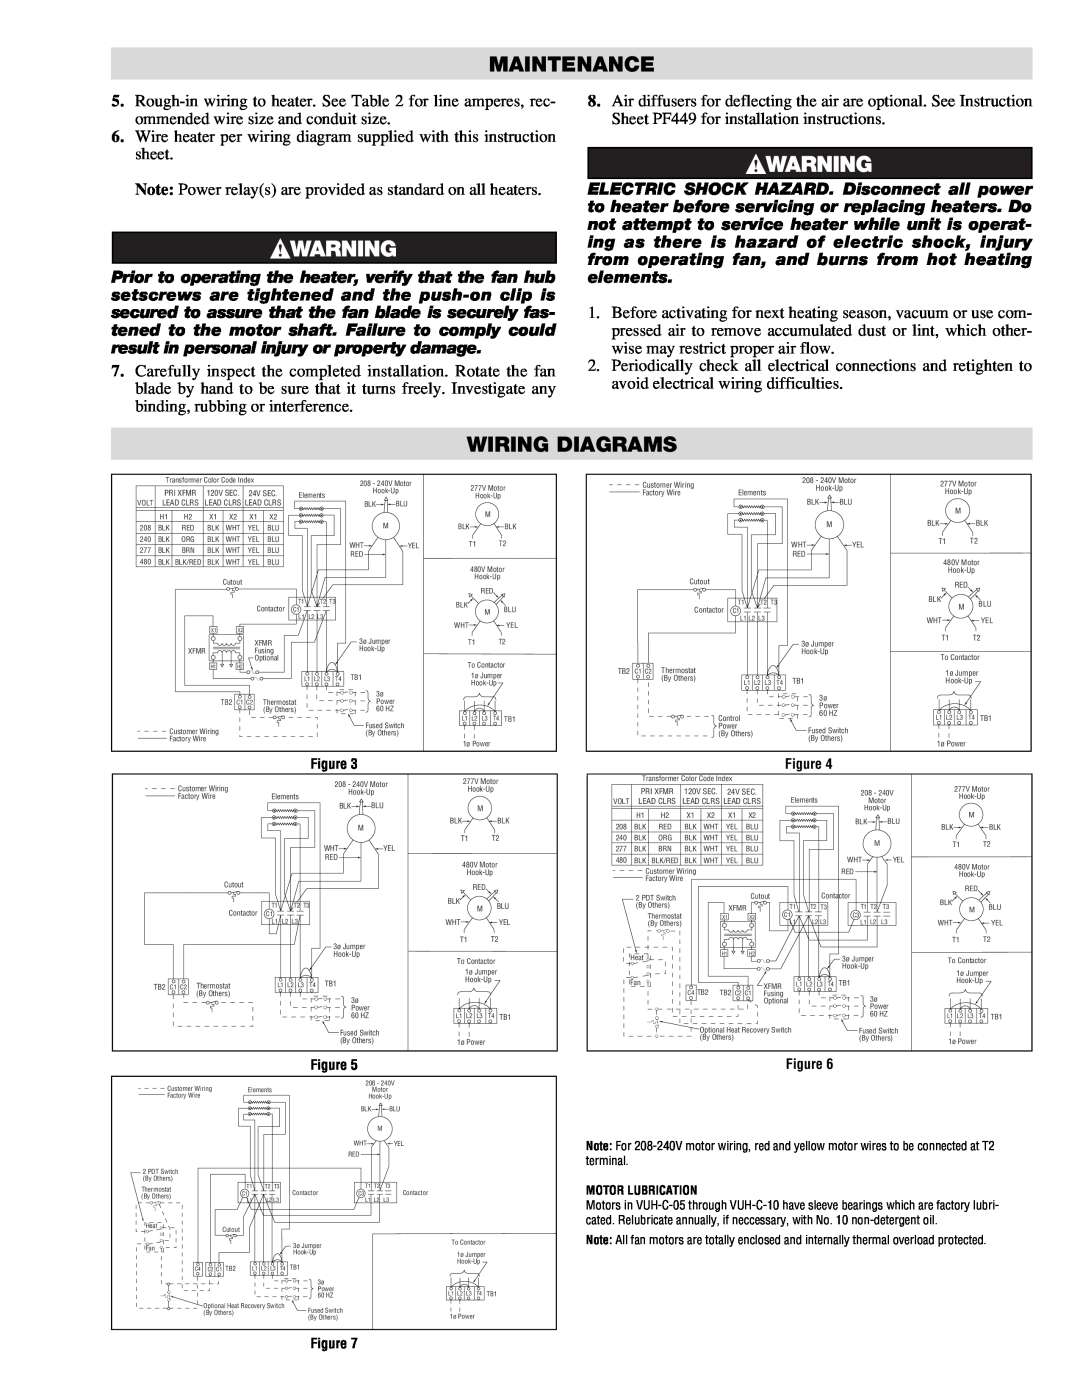 Chromalox PF450-5 specifications Maintenance, Wiring Diagrams, Motor Lubrication 